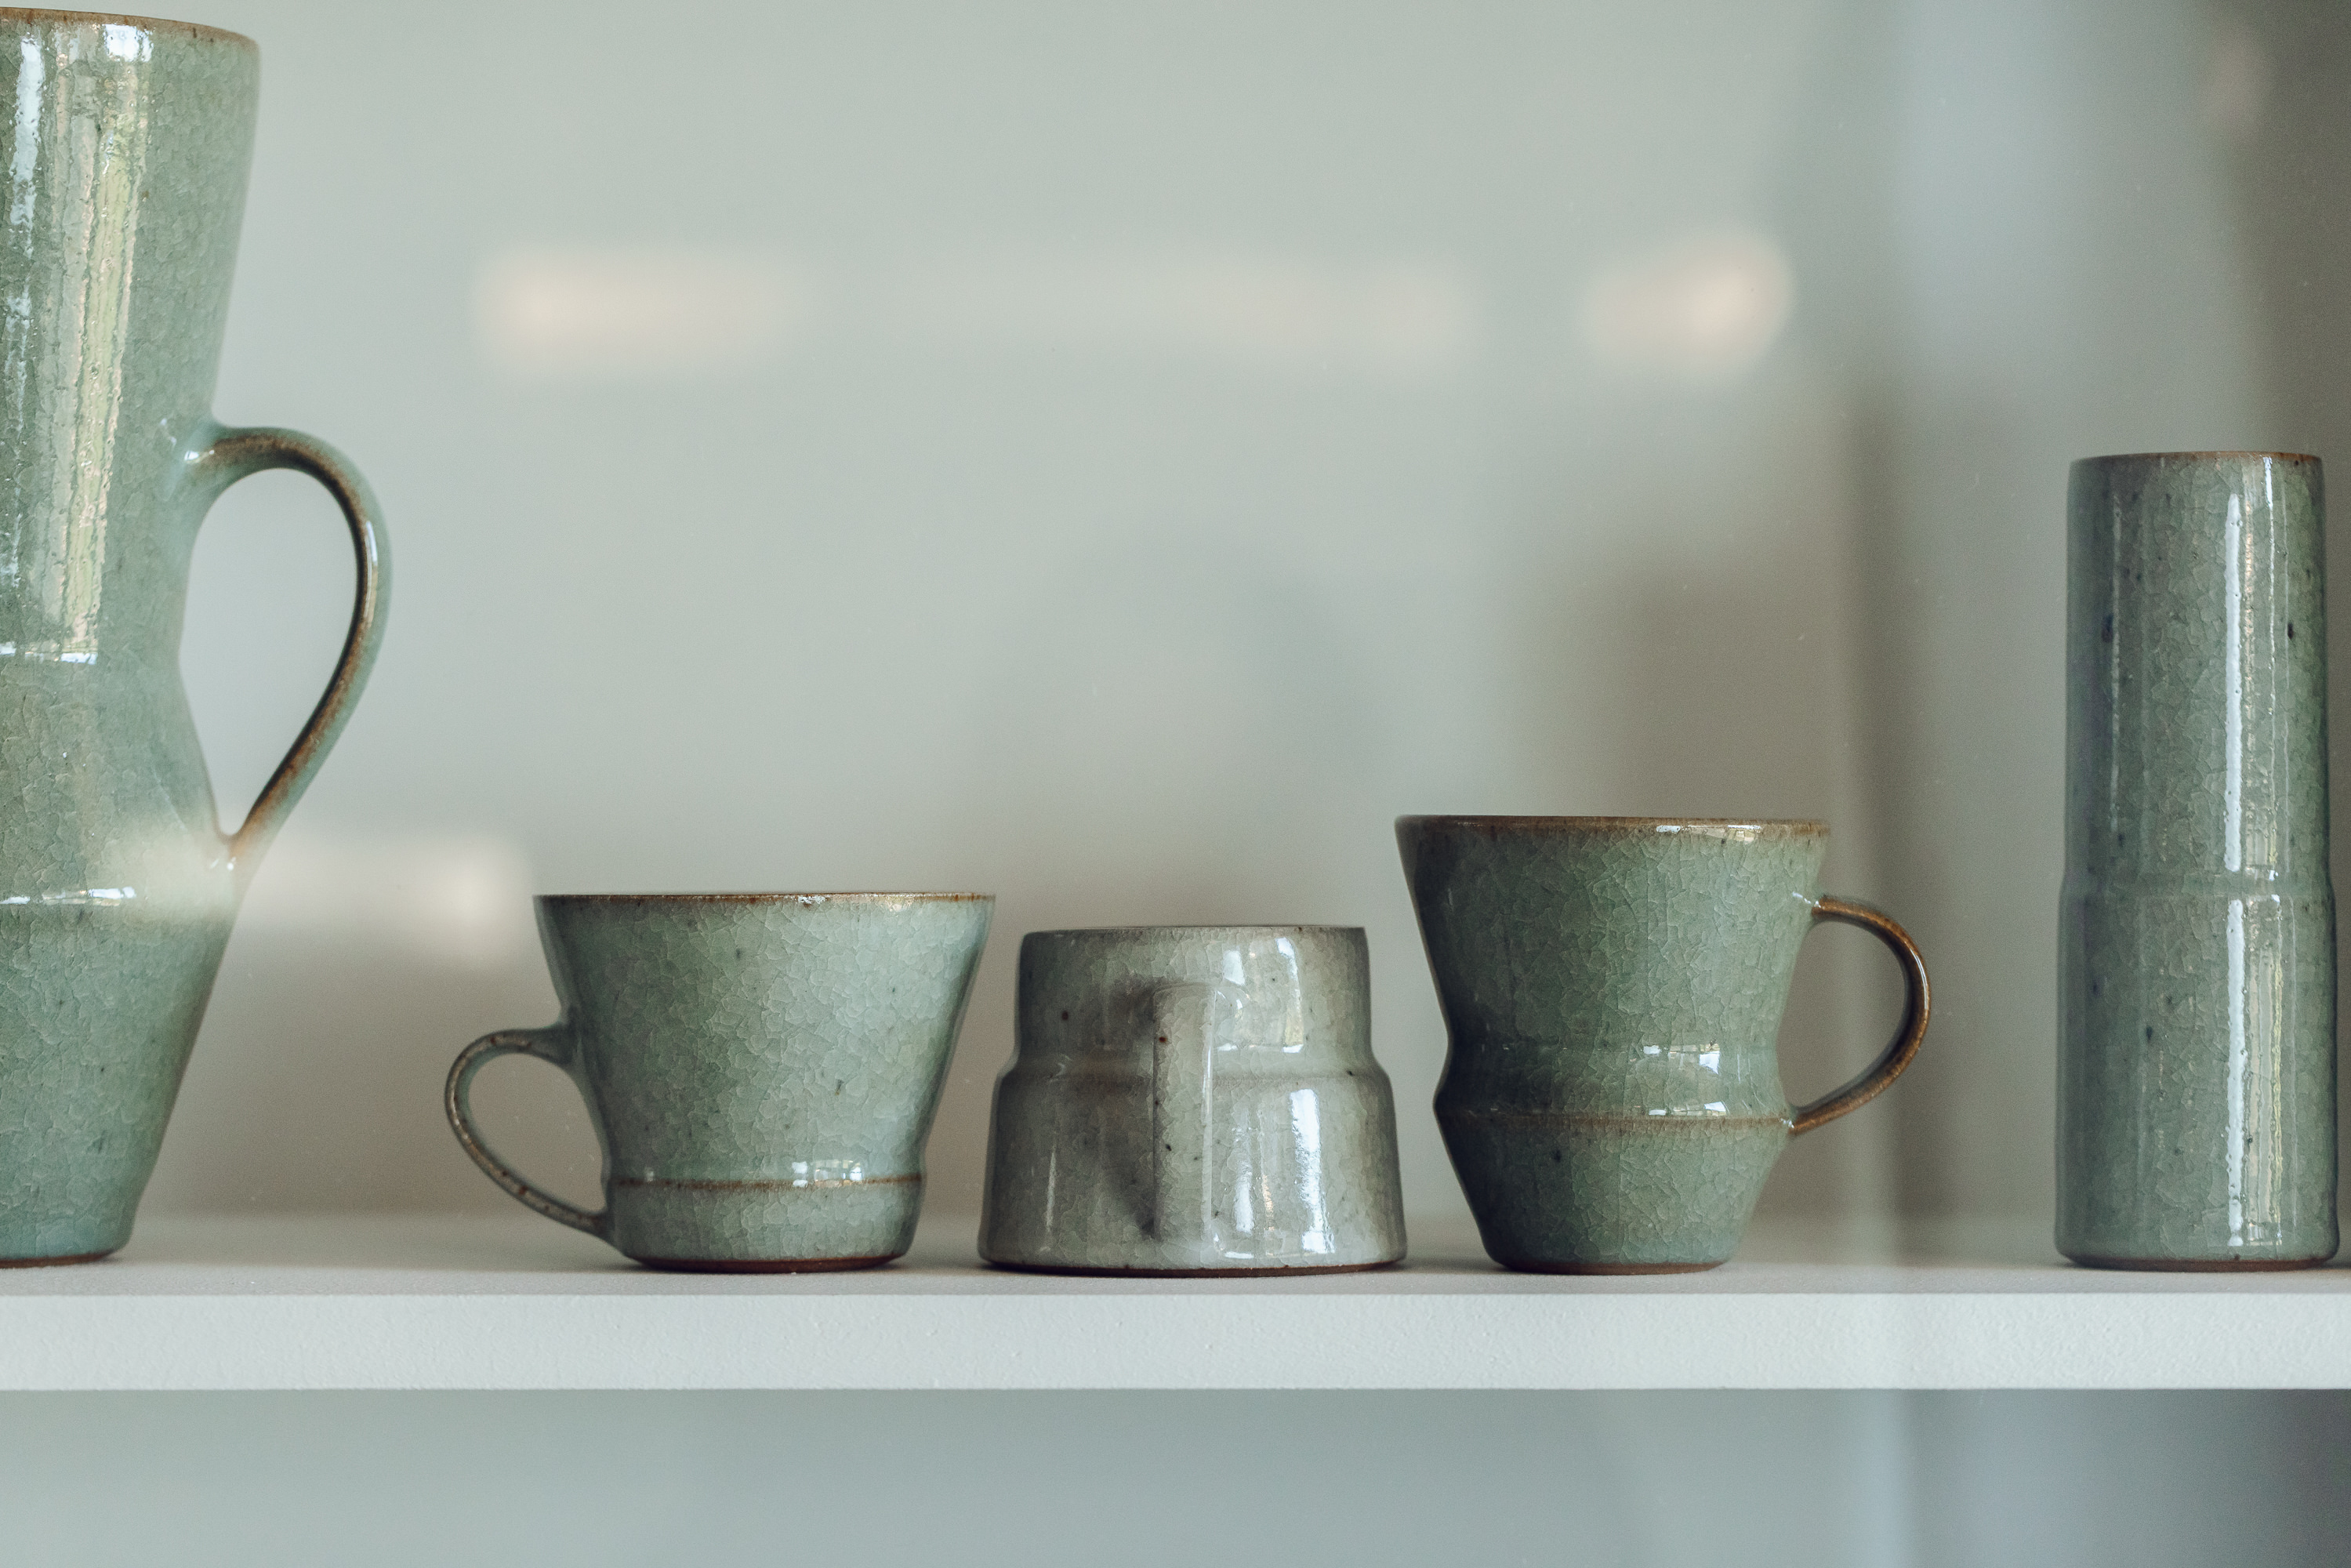 Three ceramic cups on a shelf